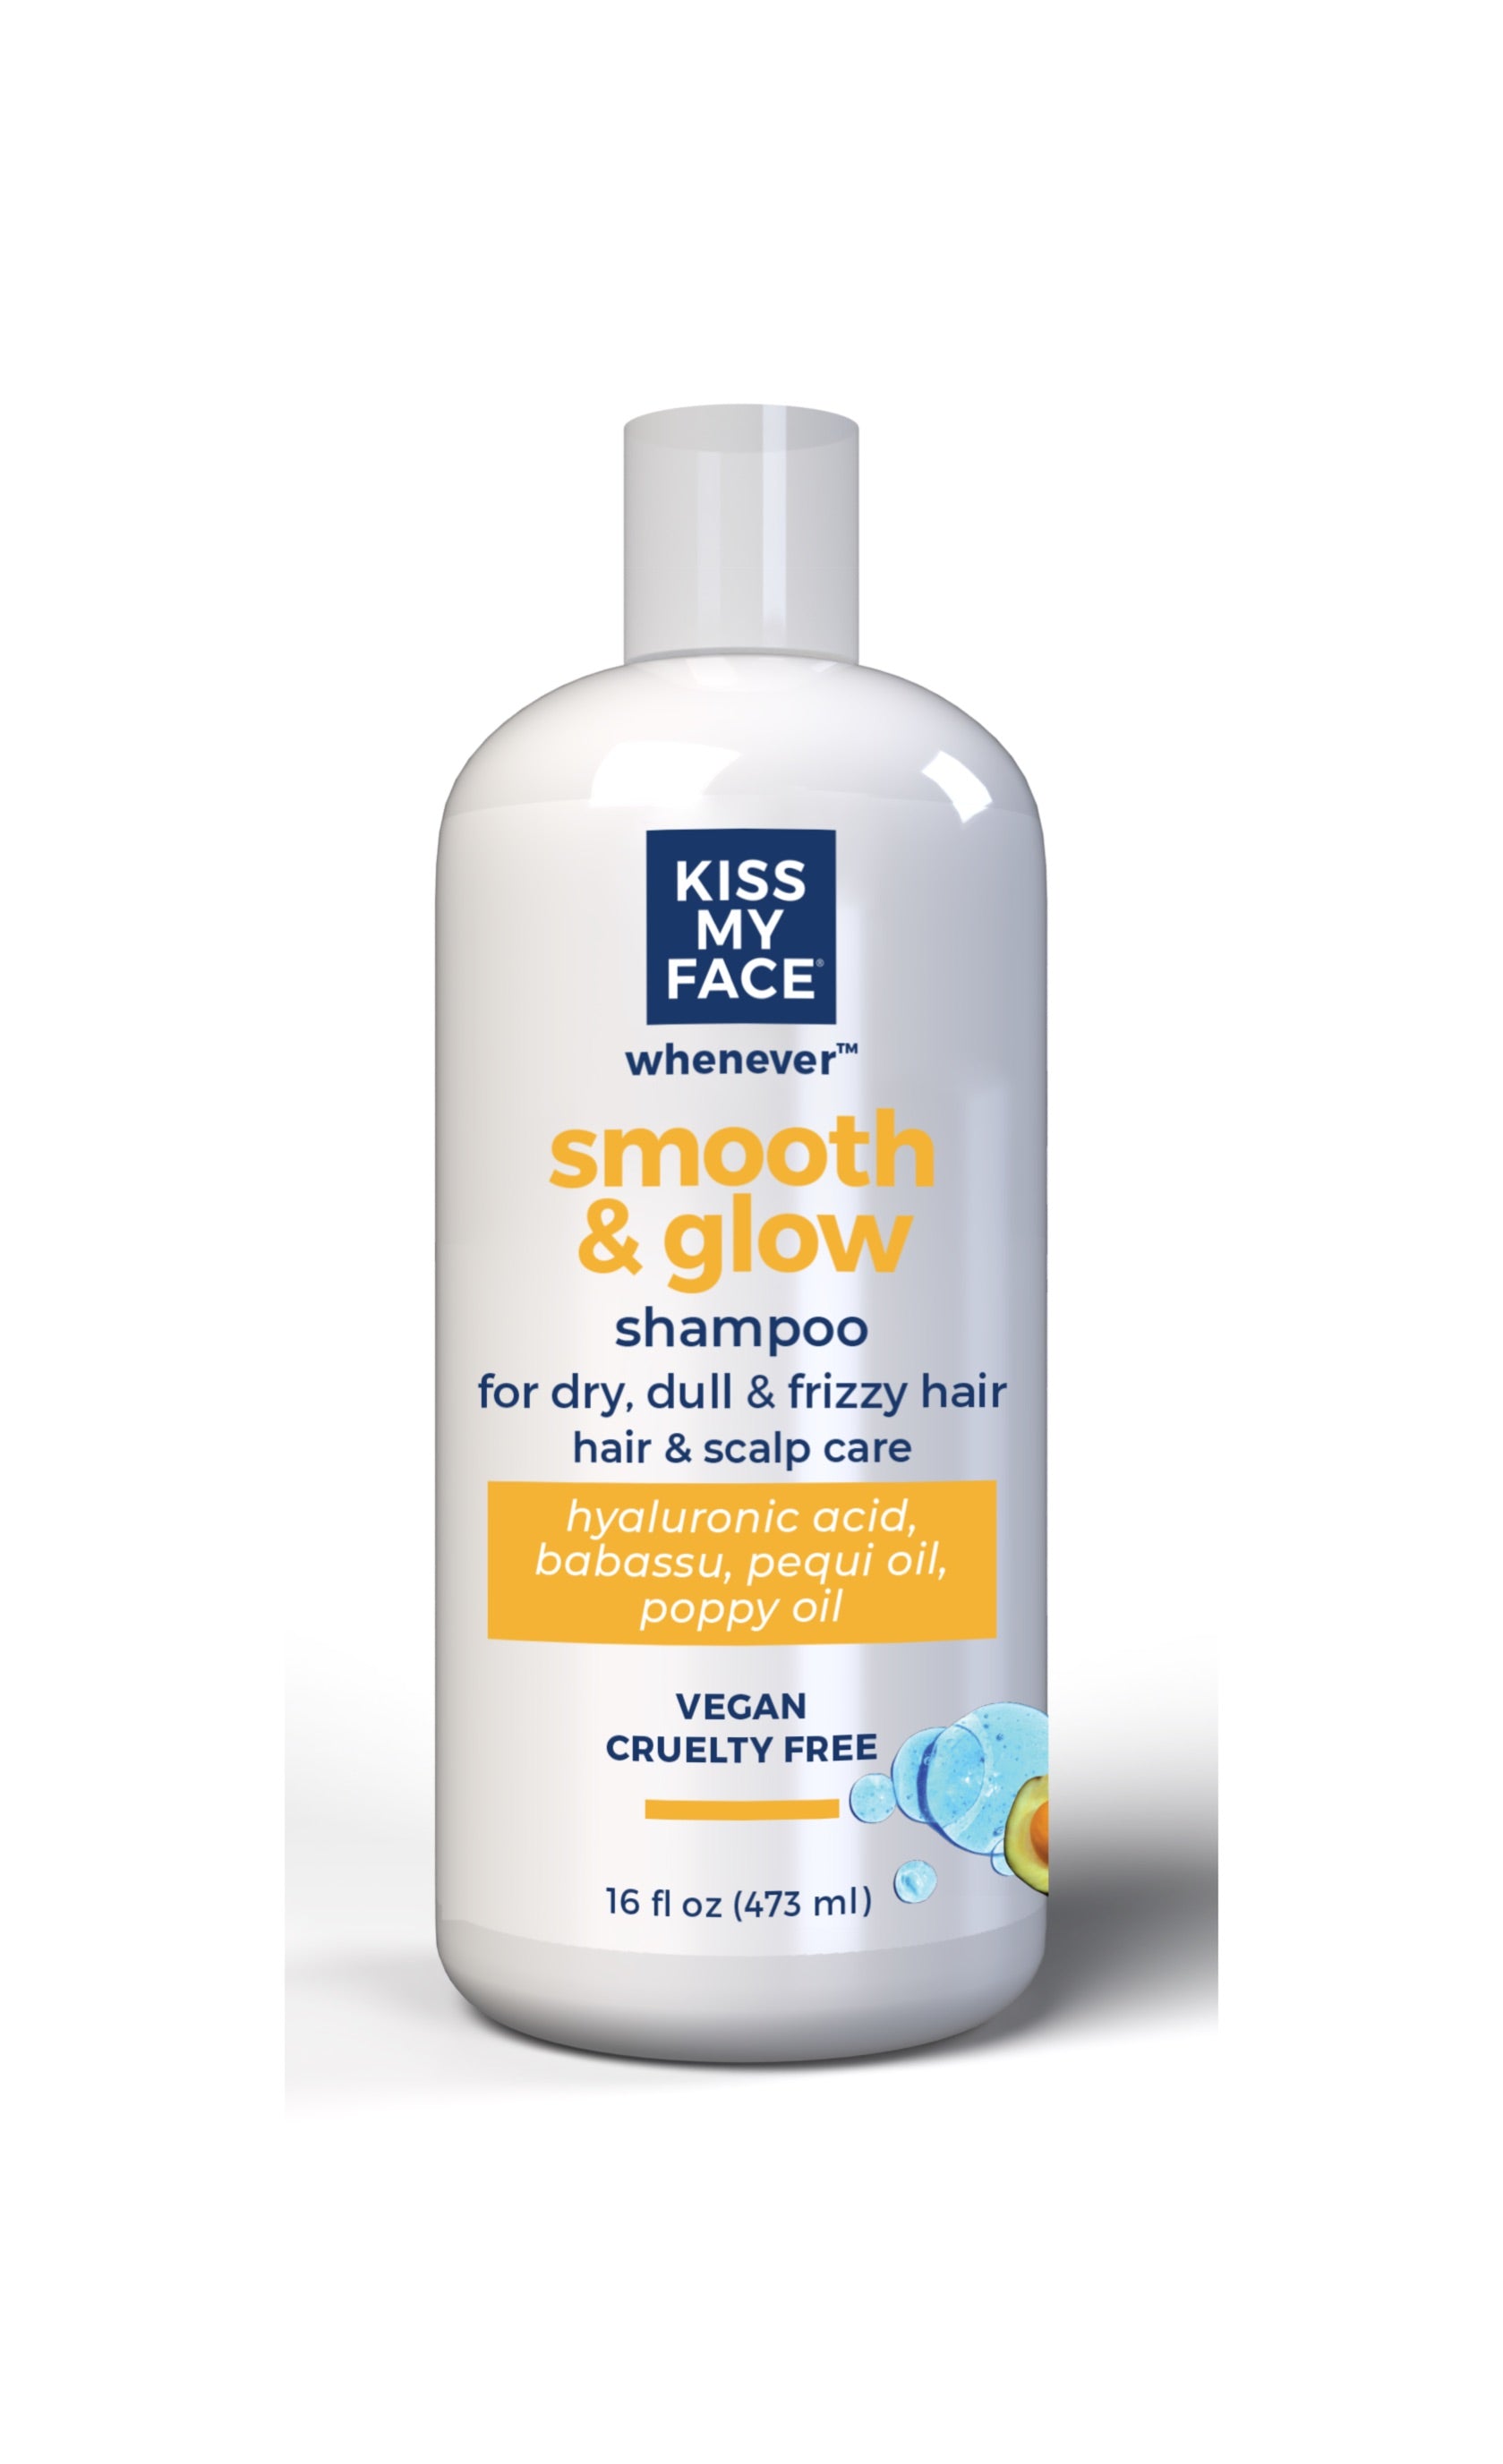 Se igennem Oswald skrot Smooth & Glow Shampoo – Kiss My Face